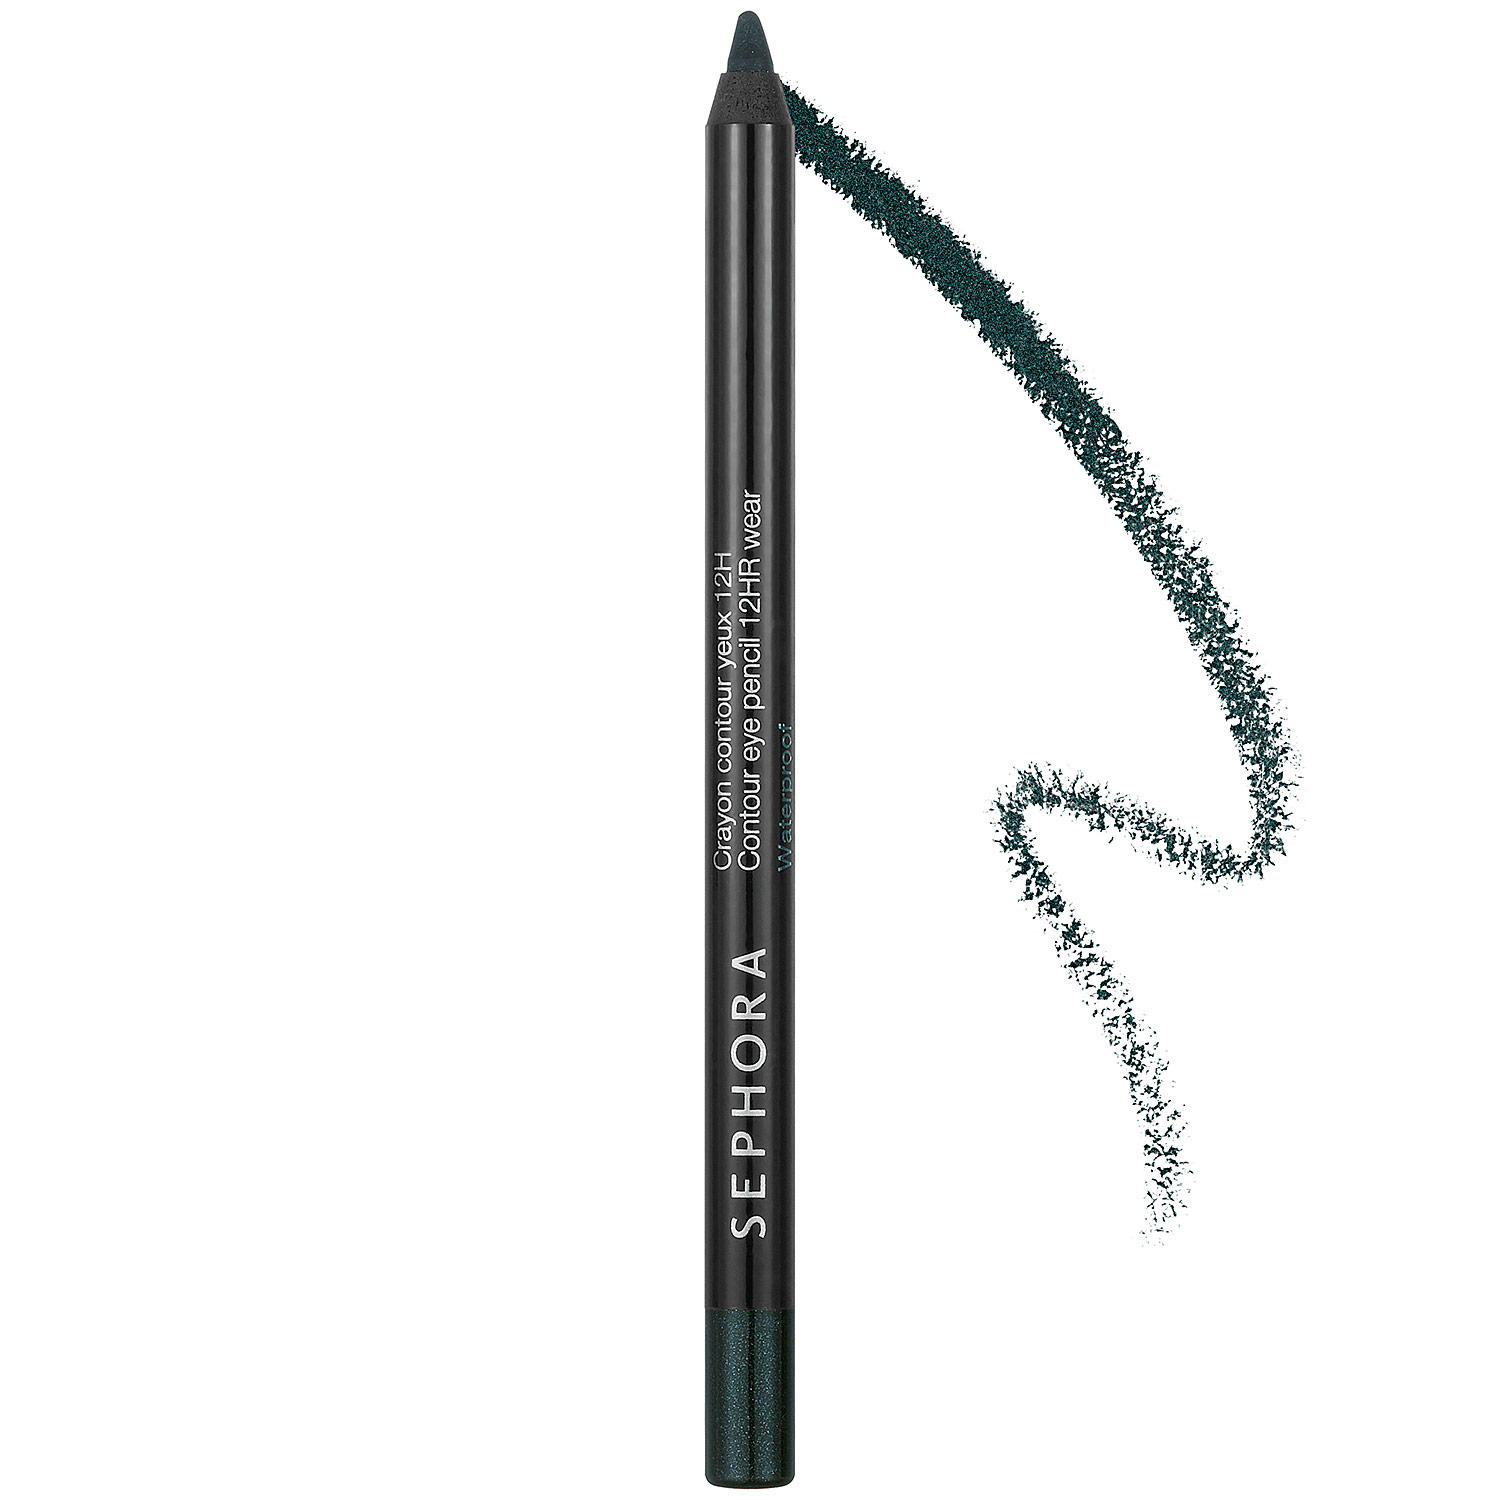 Sephora Contour Eye Pencil 12hr Wear Waterproof Galaxy Girl 25